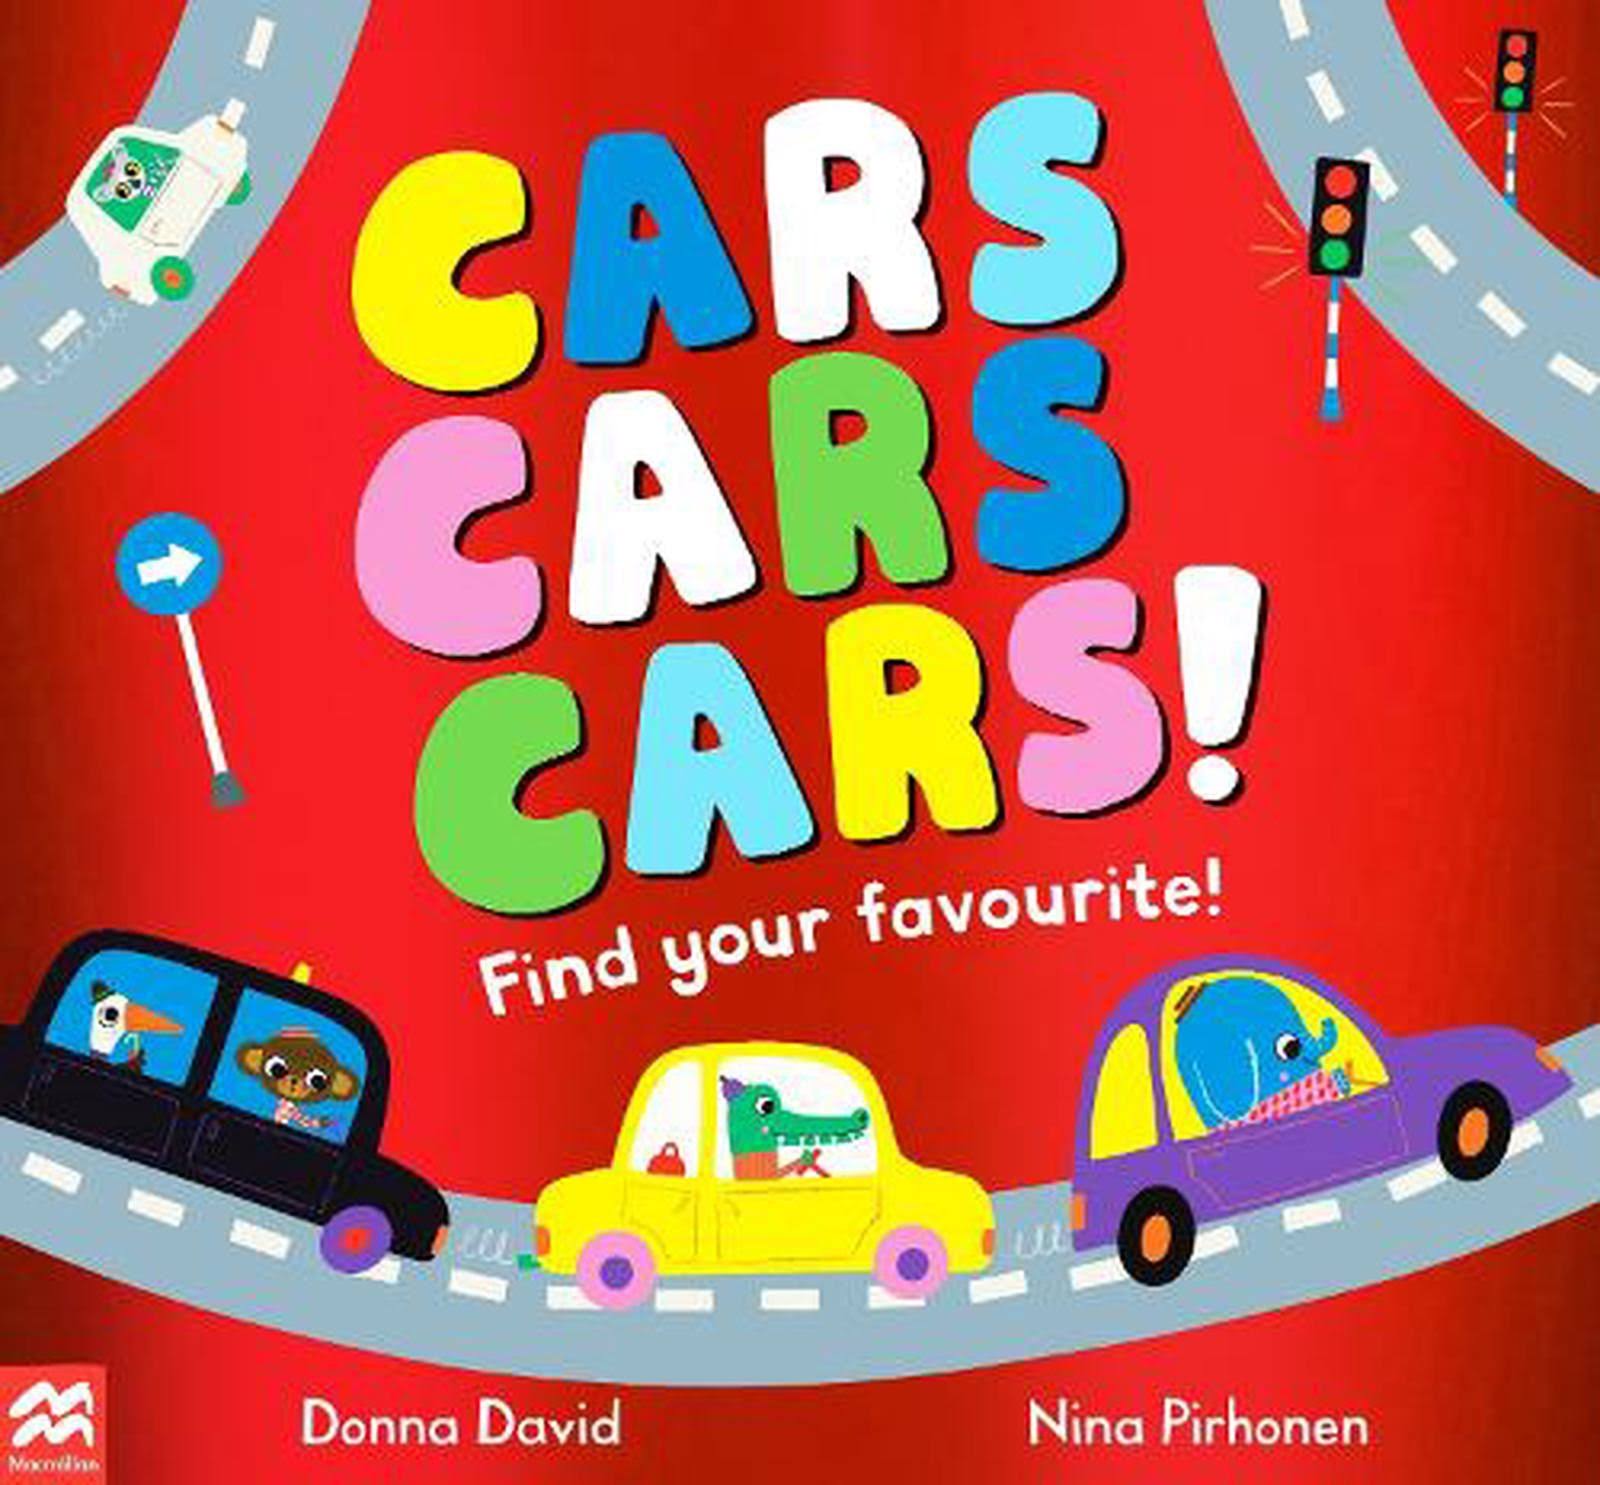 Cars Cars Cars! by Donna David